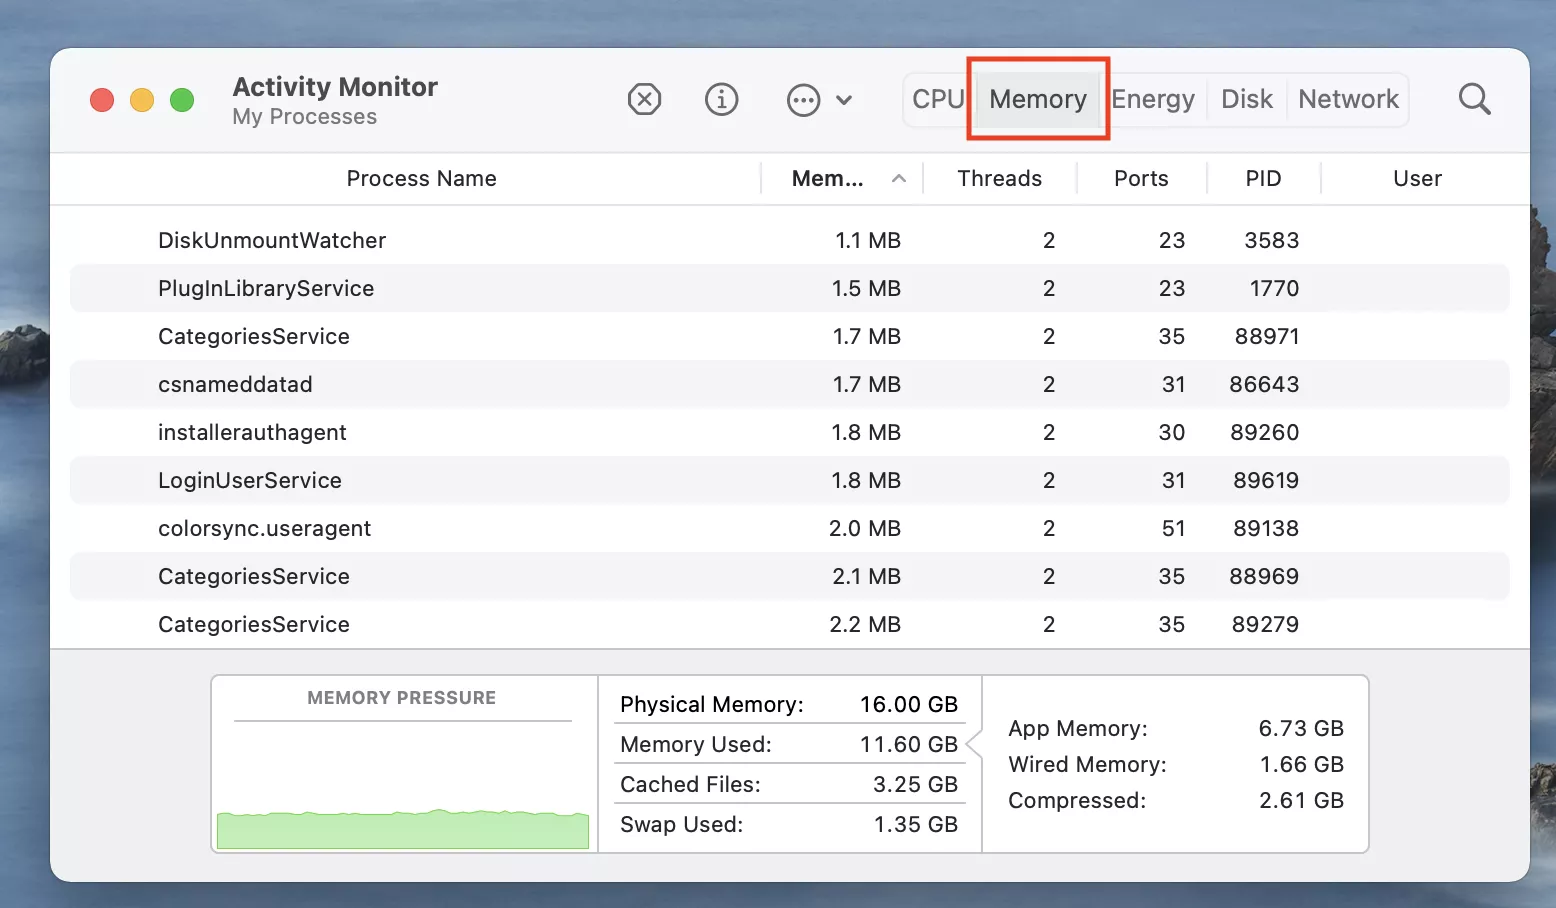 Activity Monitor > Memory